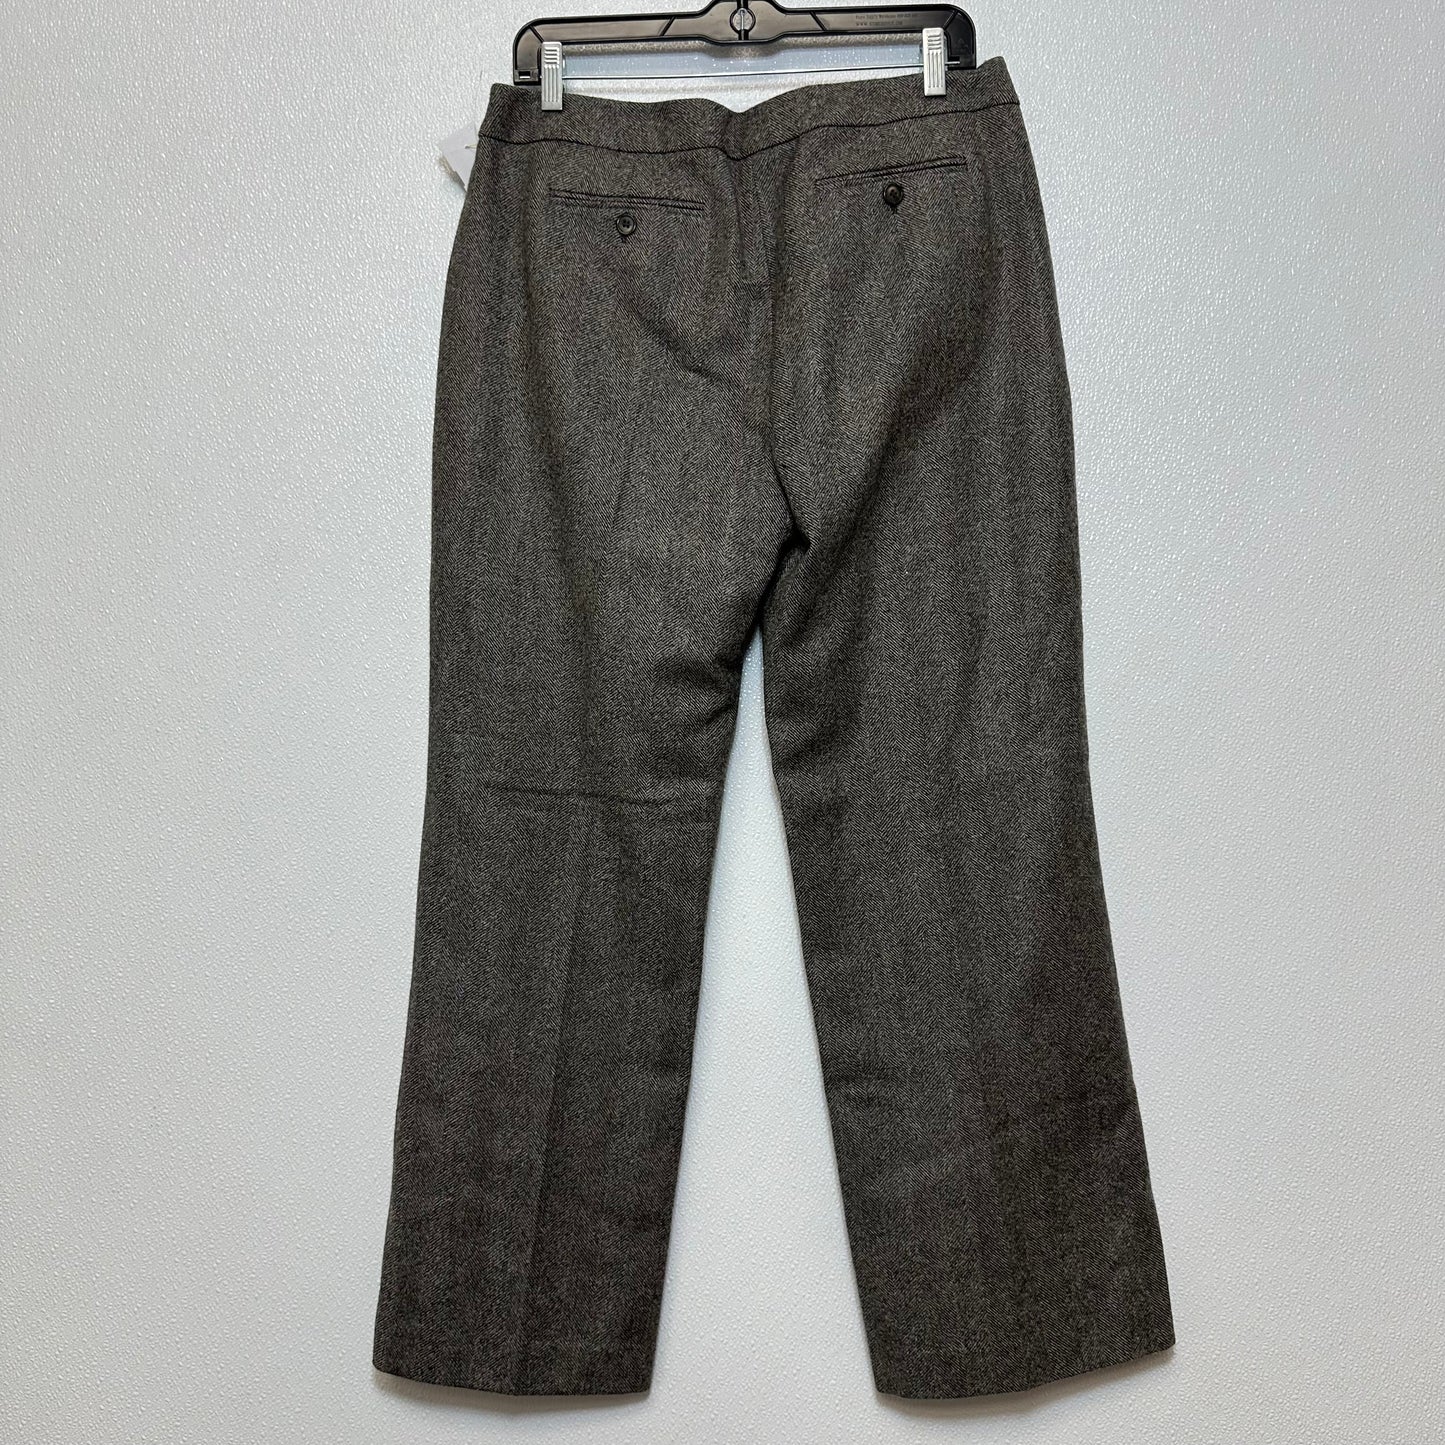 Pants Work/dress By Boden  Size: 10petite